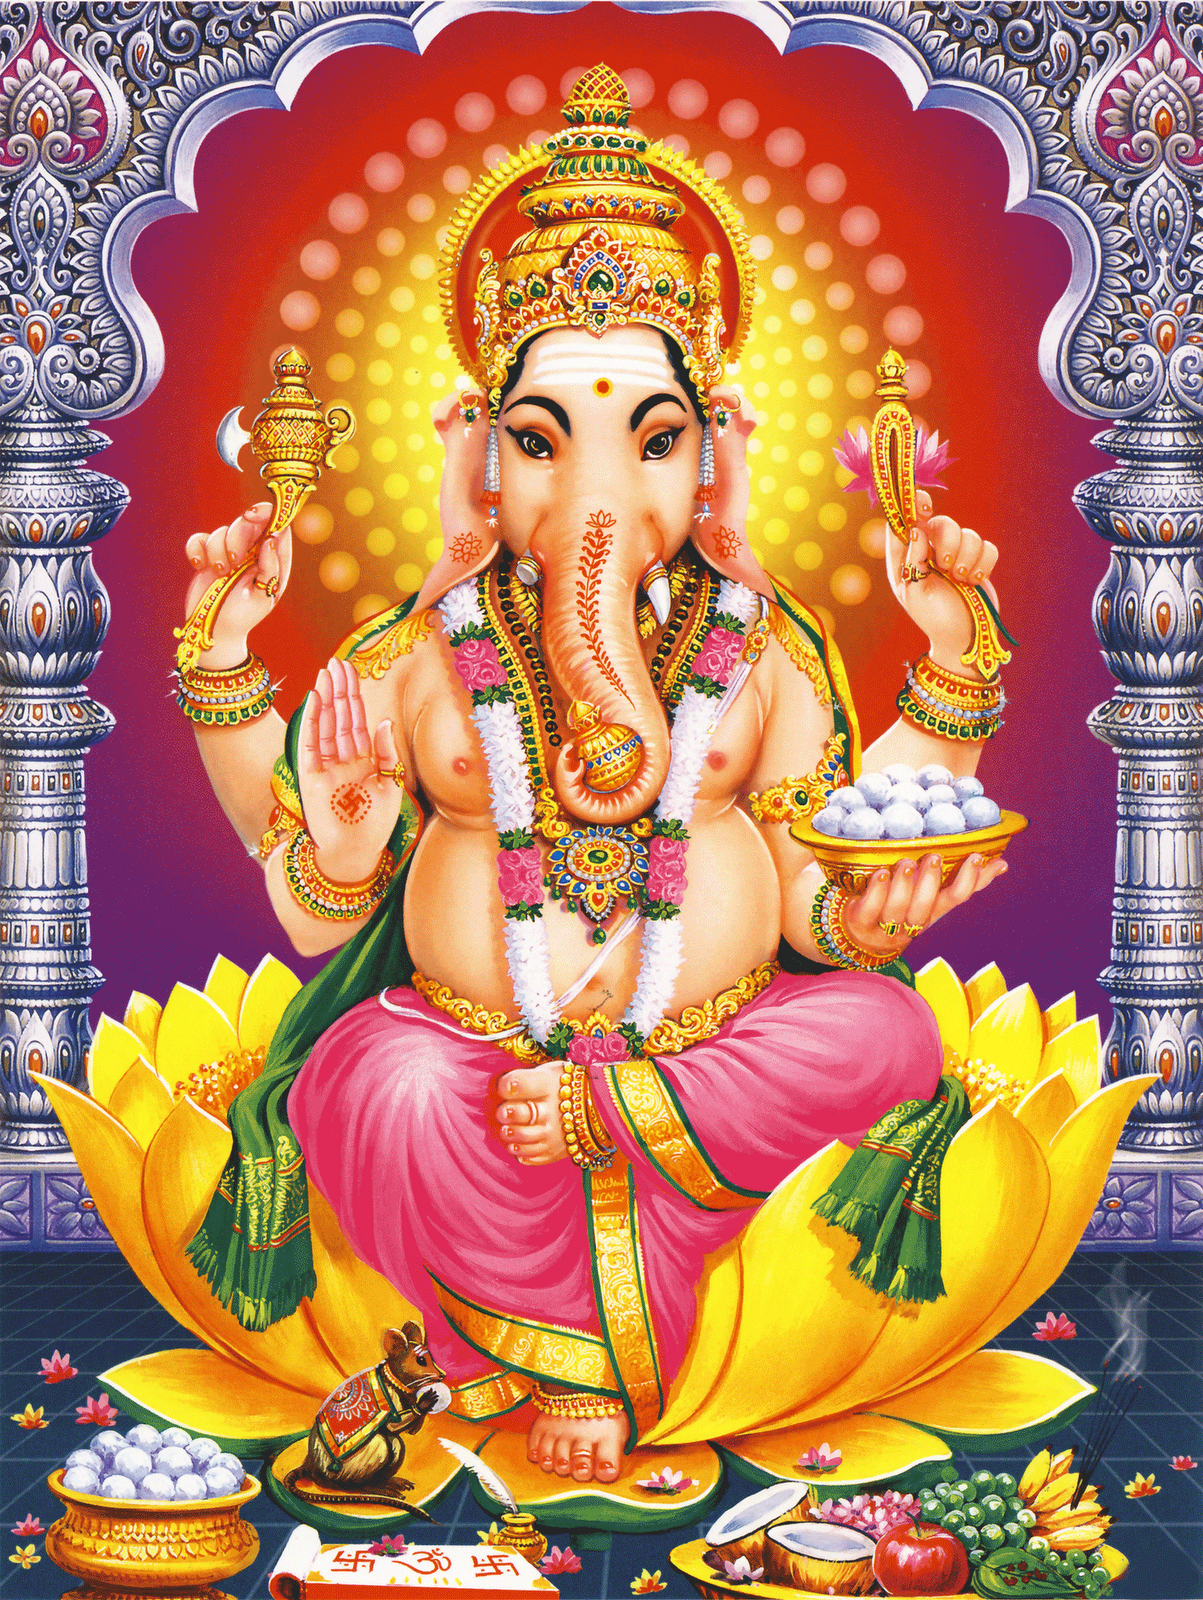 tamil god wallpaper free download